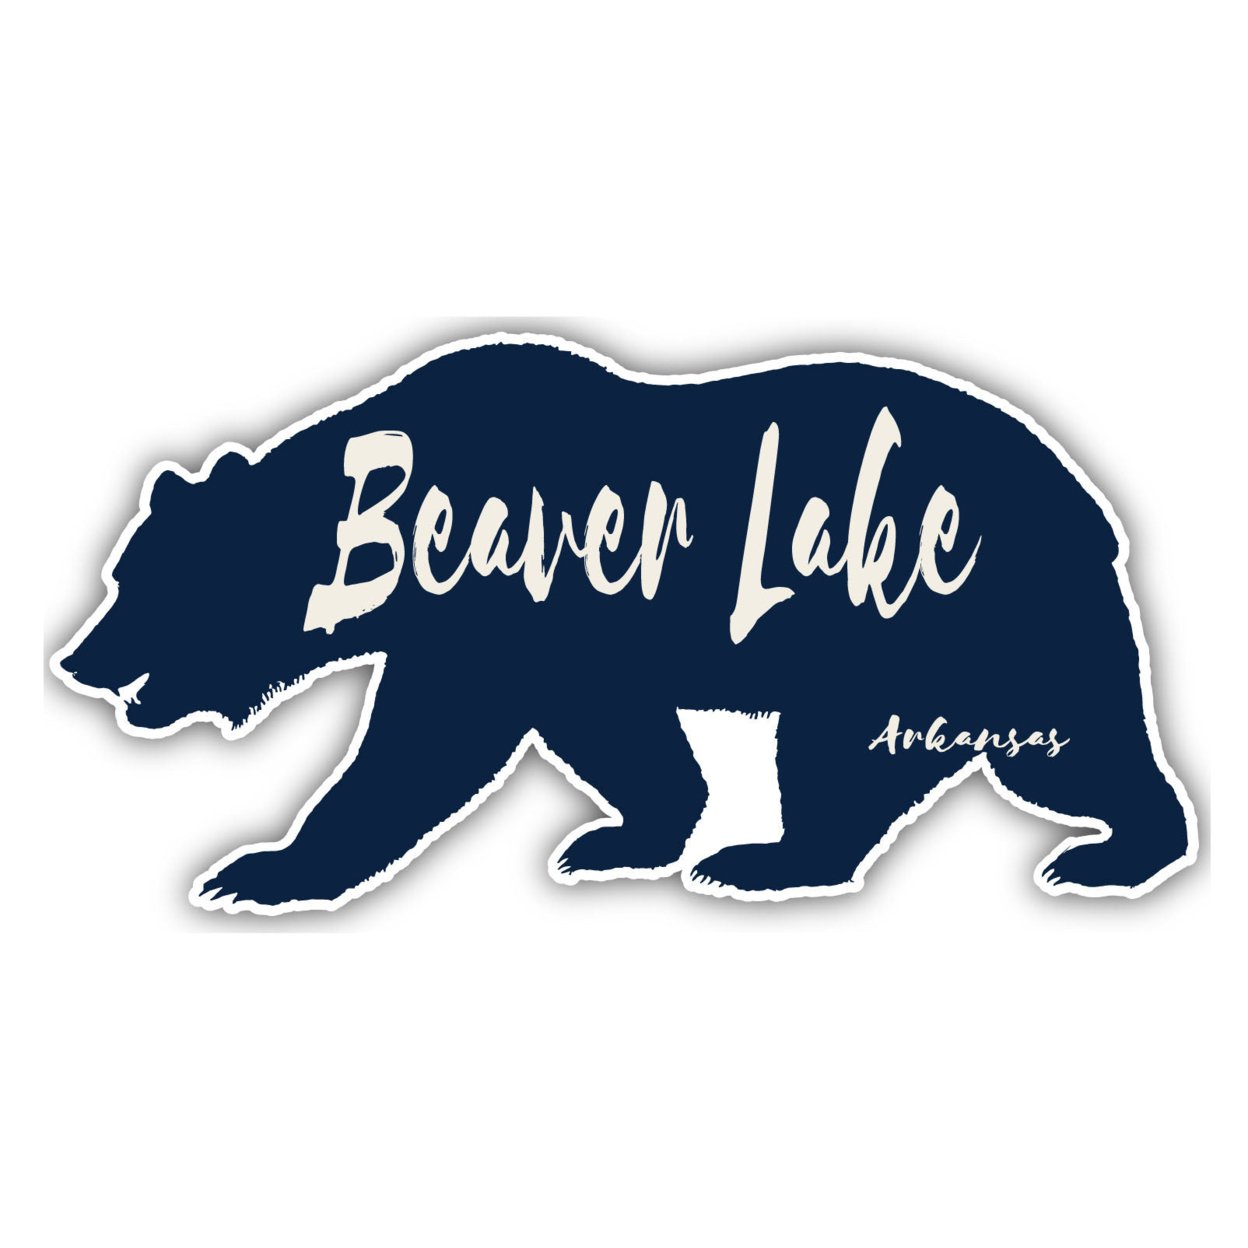 Beaver Lake Arkansas Souvenir Decorative Stickers (Choose Theme And Size) - 4-Pack, 4-Inch, Bear